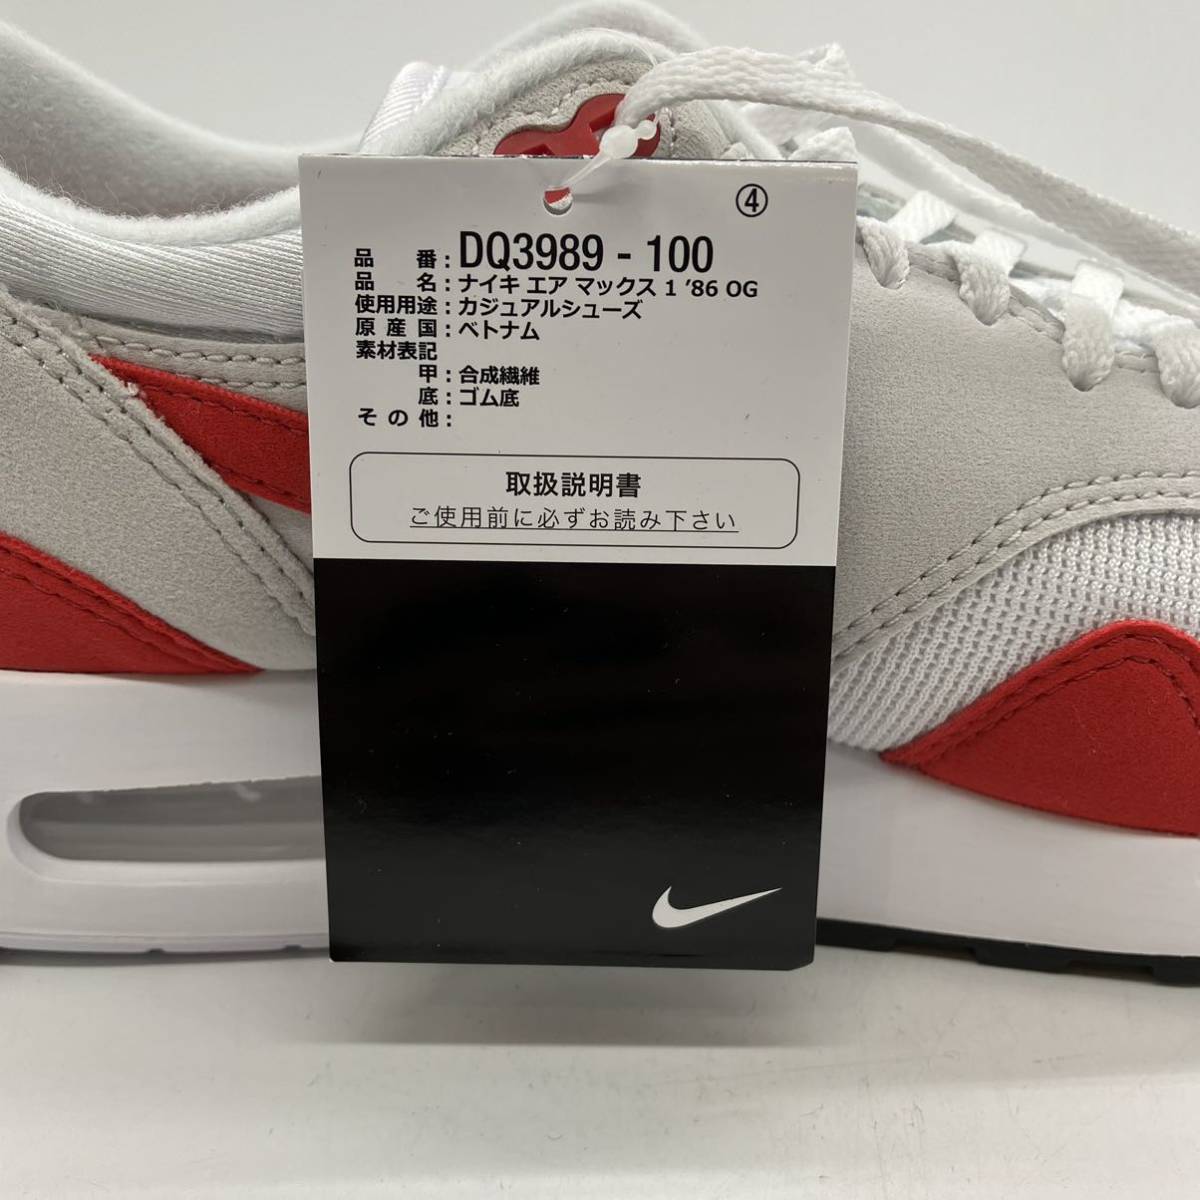 [26.5cm] новый товар Nike Air Max 1 *86 OG Big Bubble Red Nike air max 1 большой Bubble красный (DQ3989-100) F140